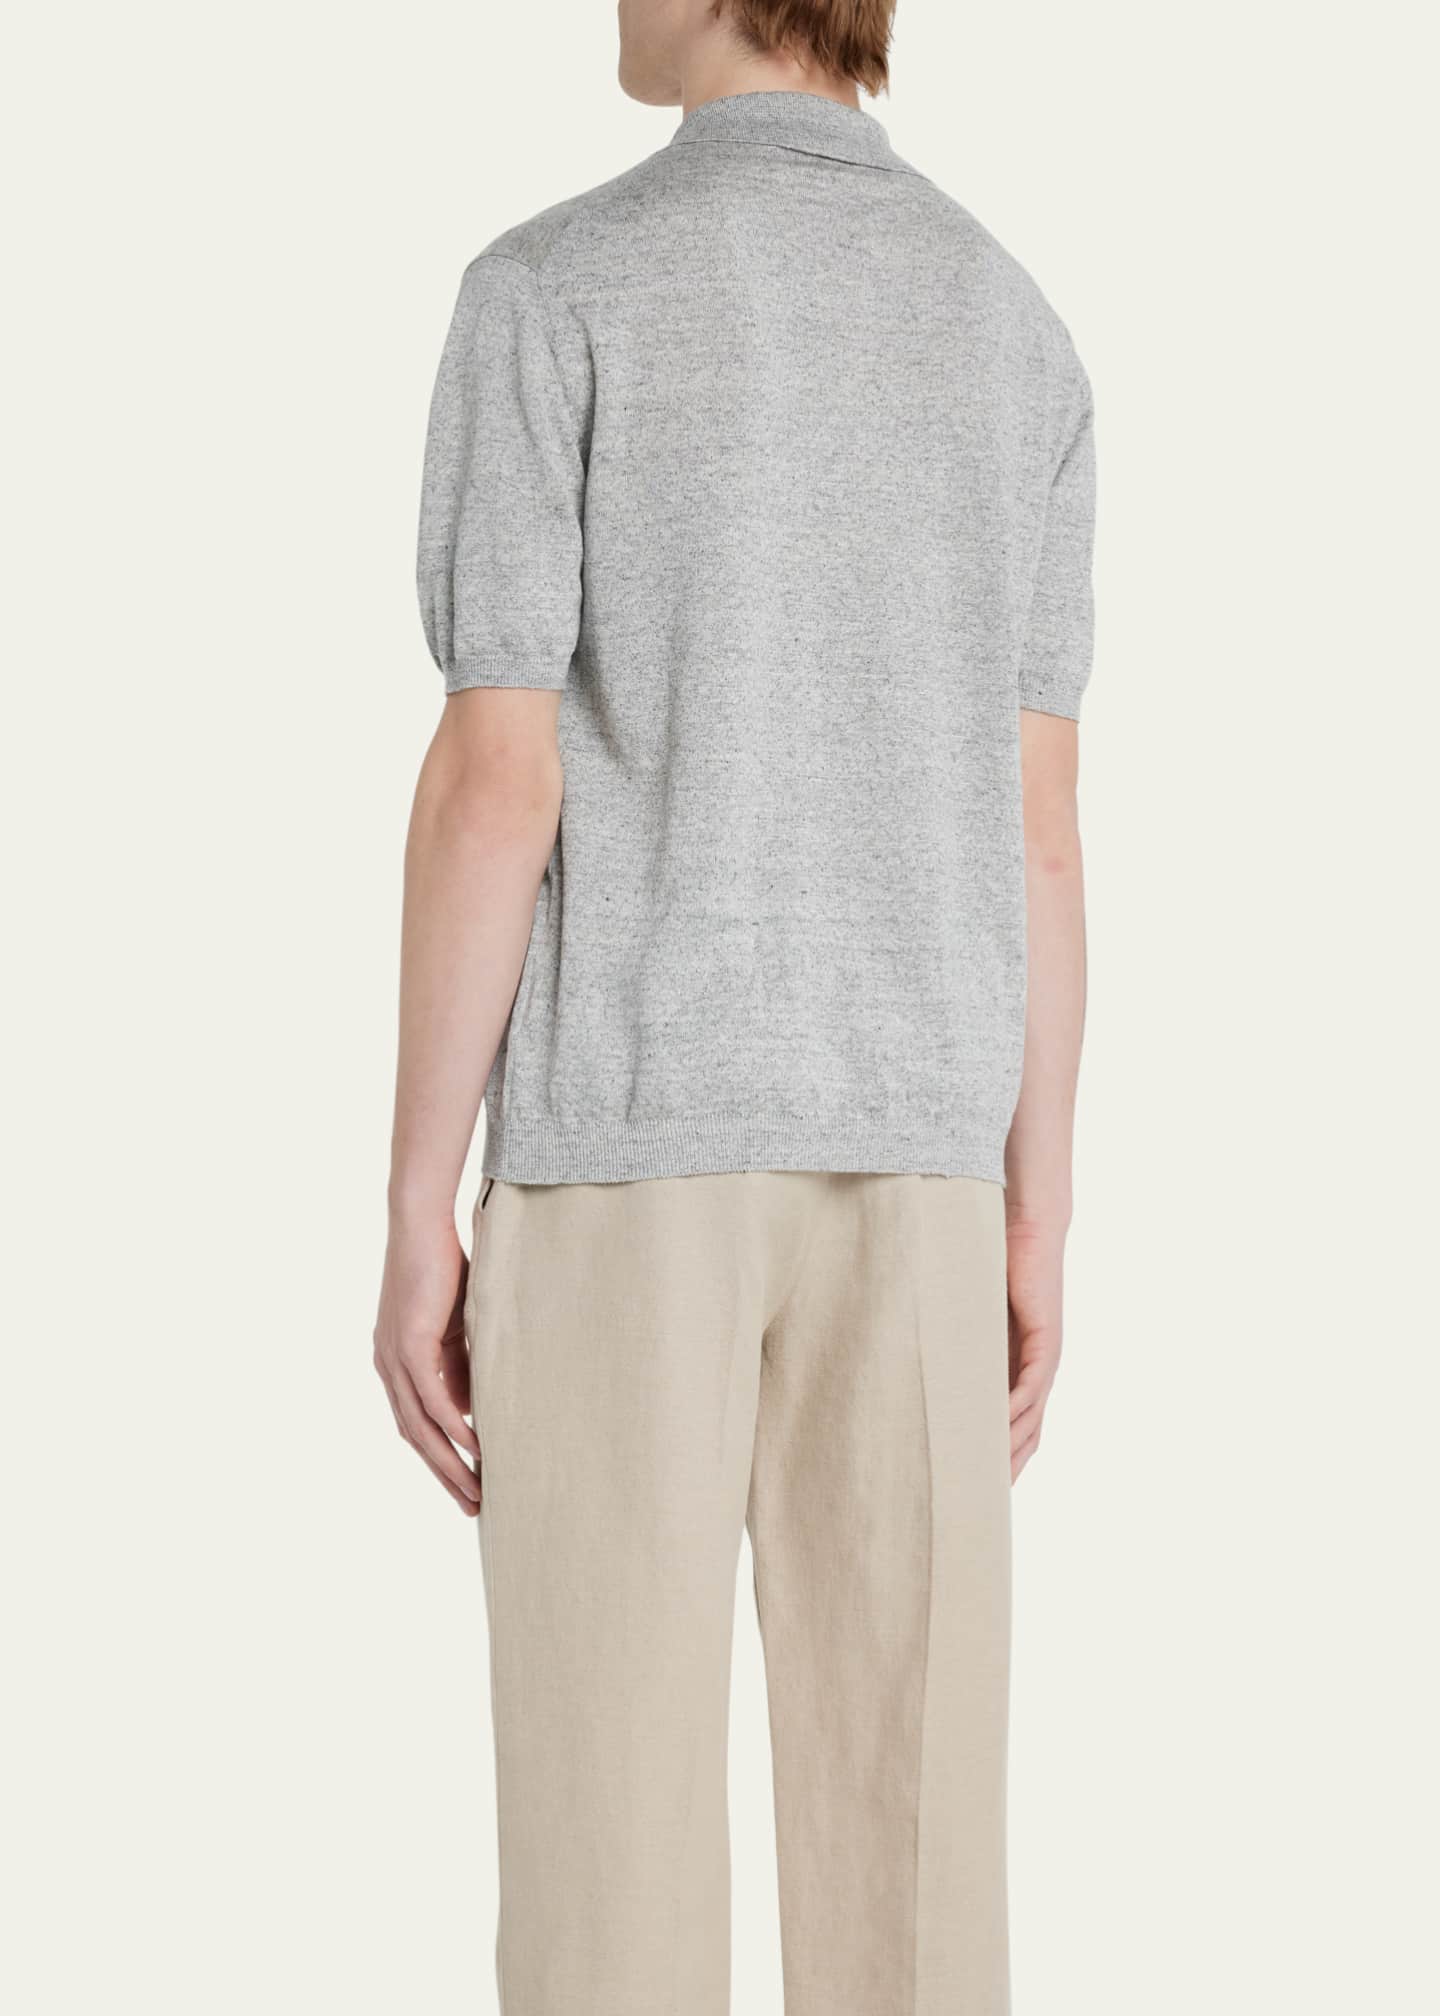 Maurizio Baldassari Men's Short Sleeve Linen Polo Shirt - Bergdorf Goodman